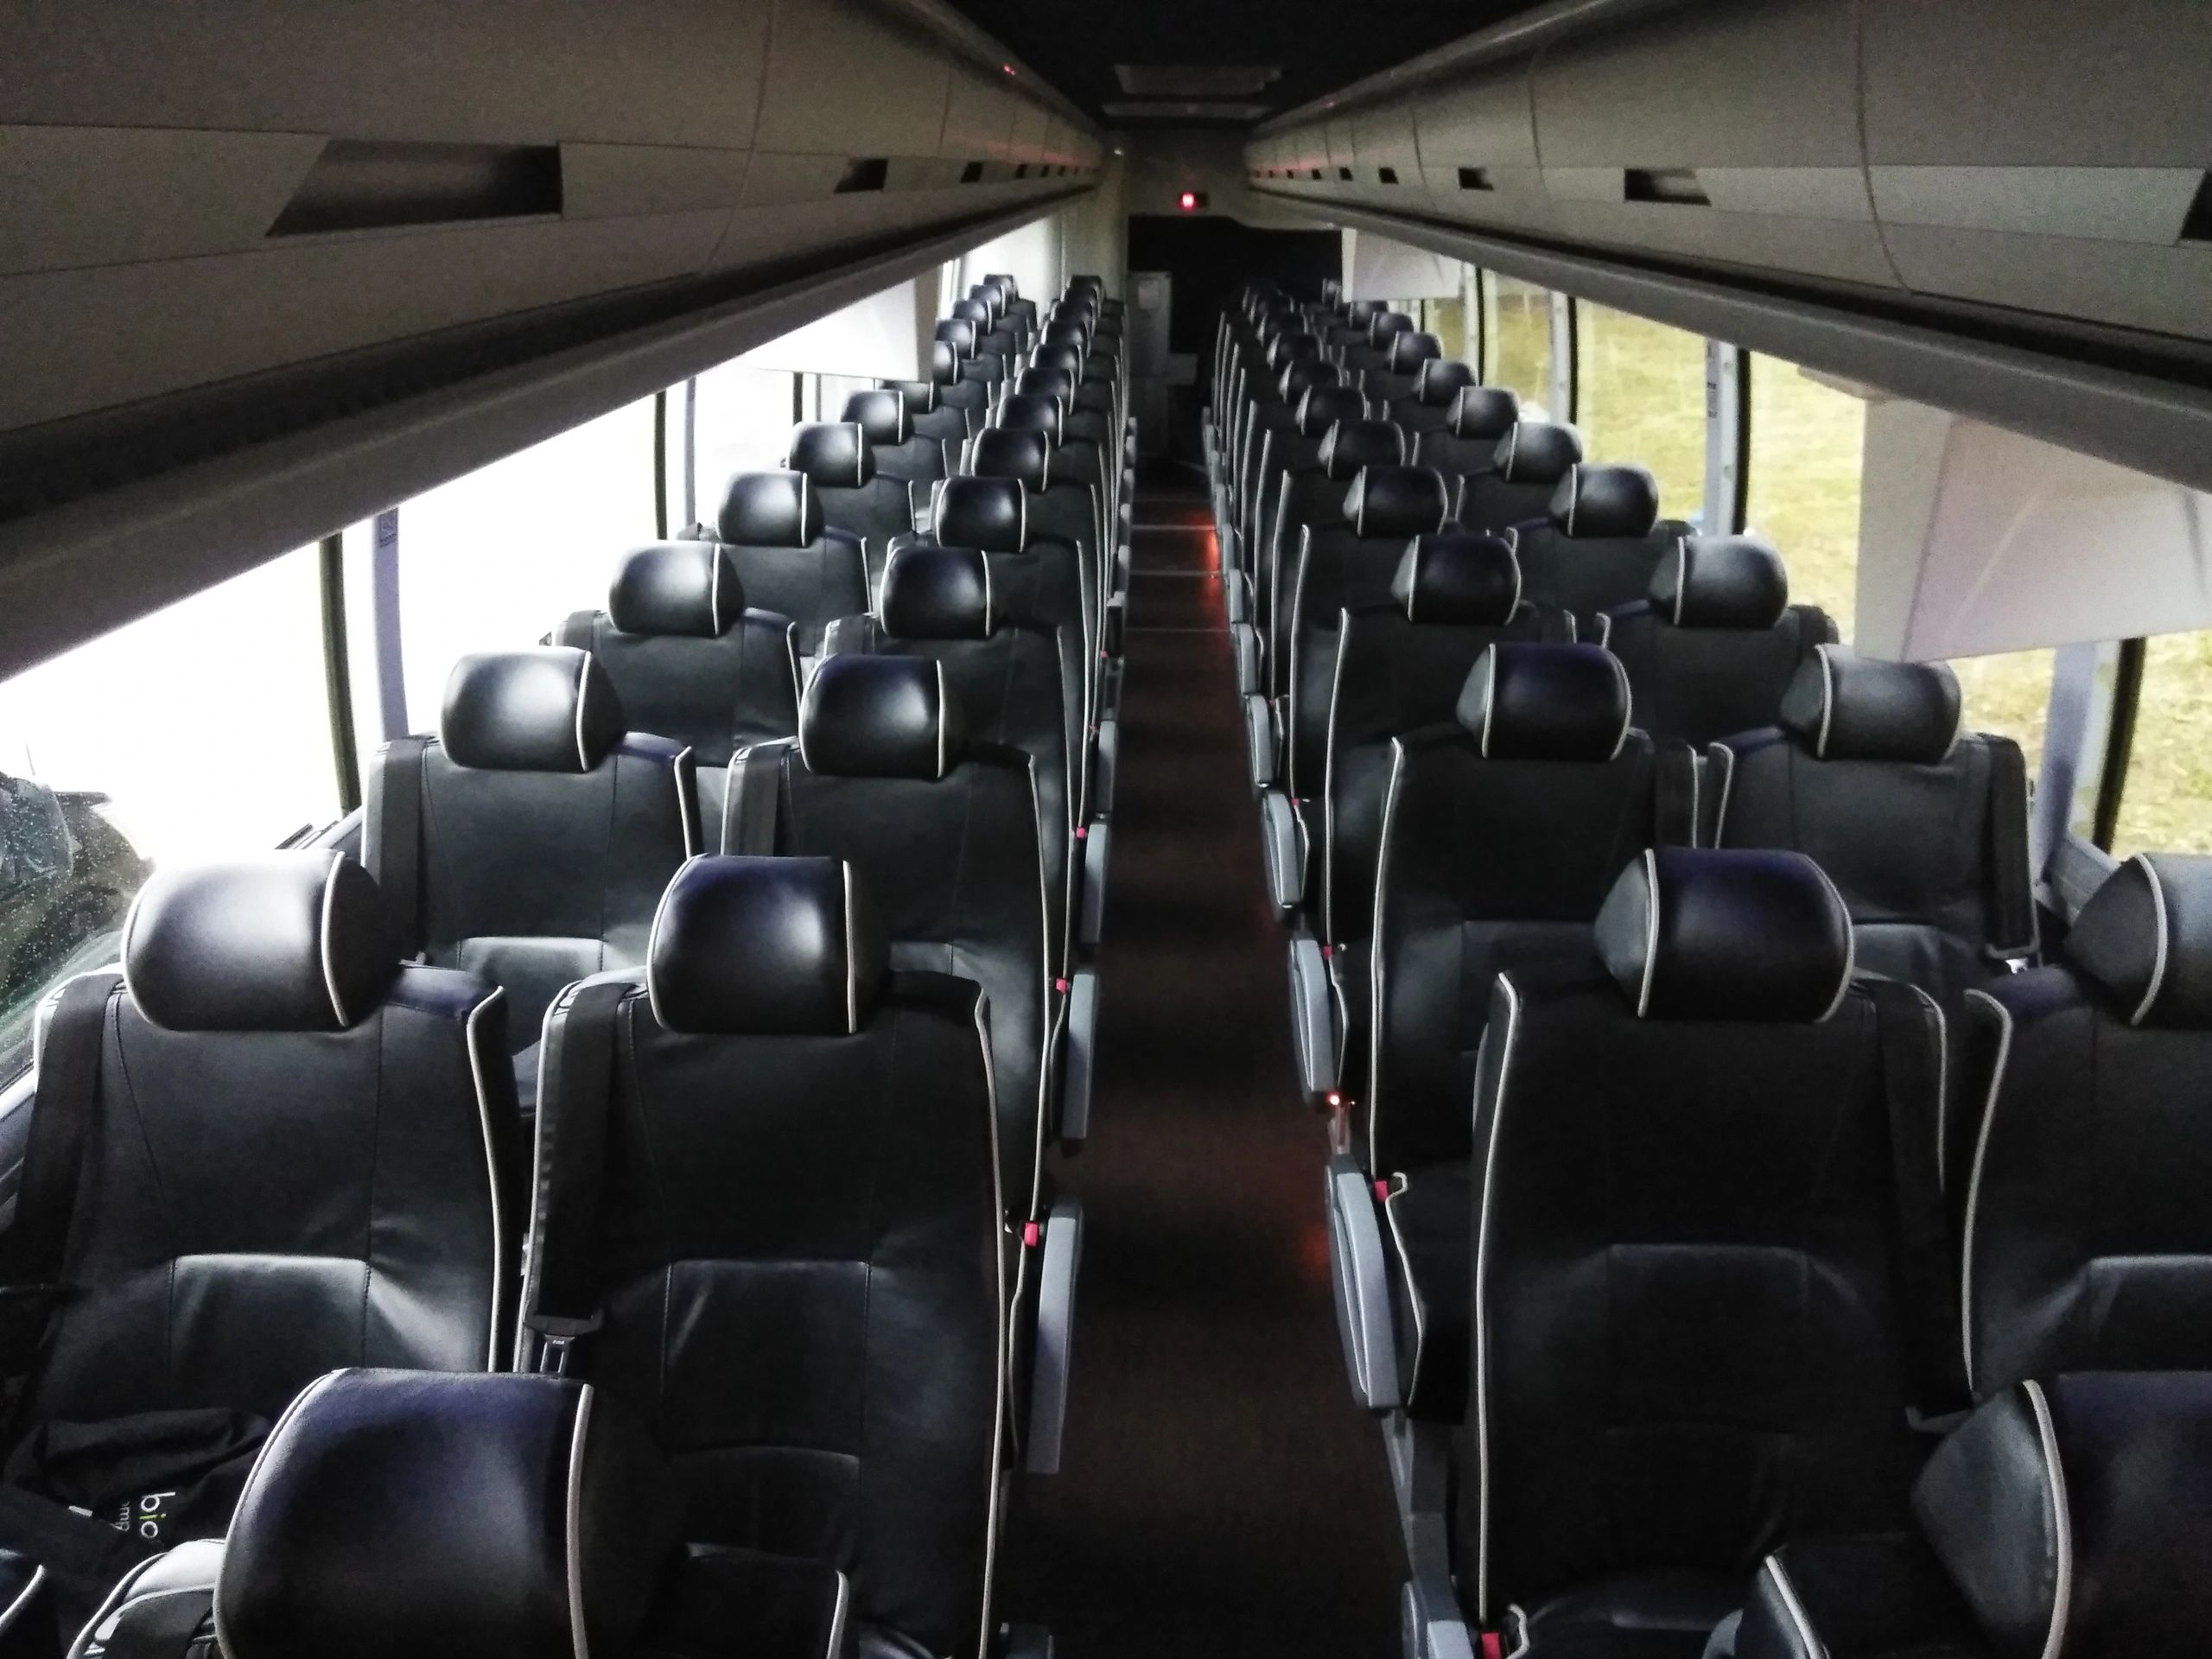 56 Passenger Coach Bus, Charter Bus Transportation Service in Houston, Texas.